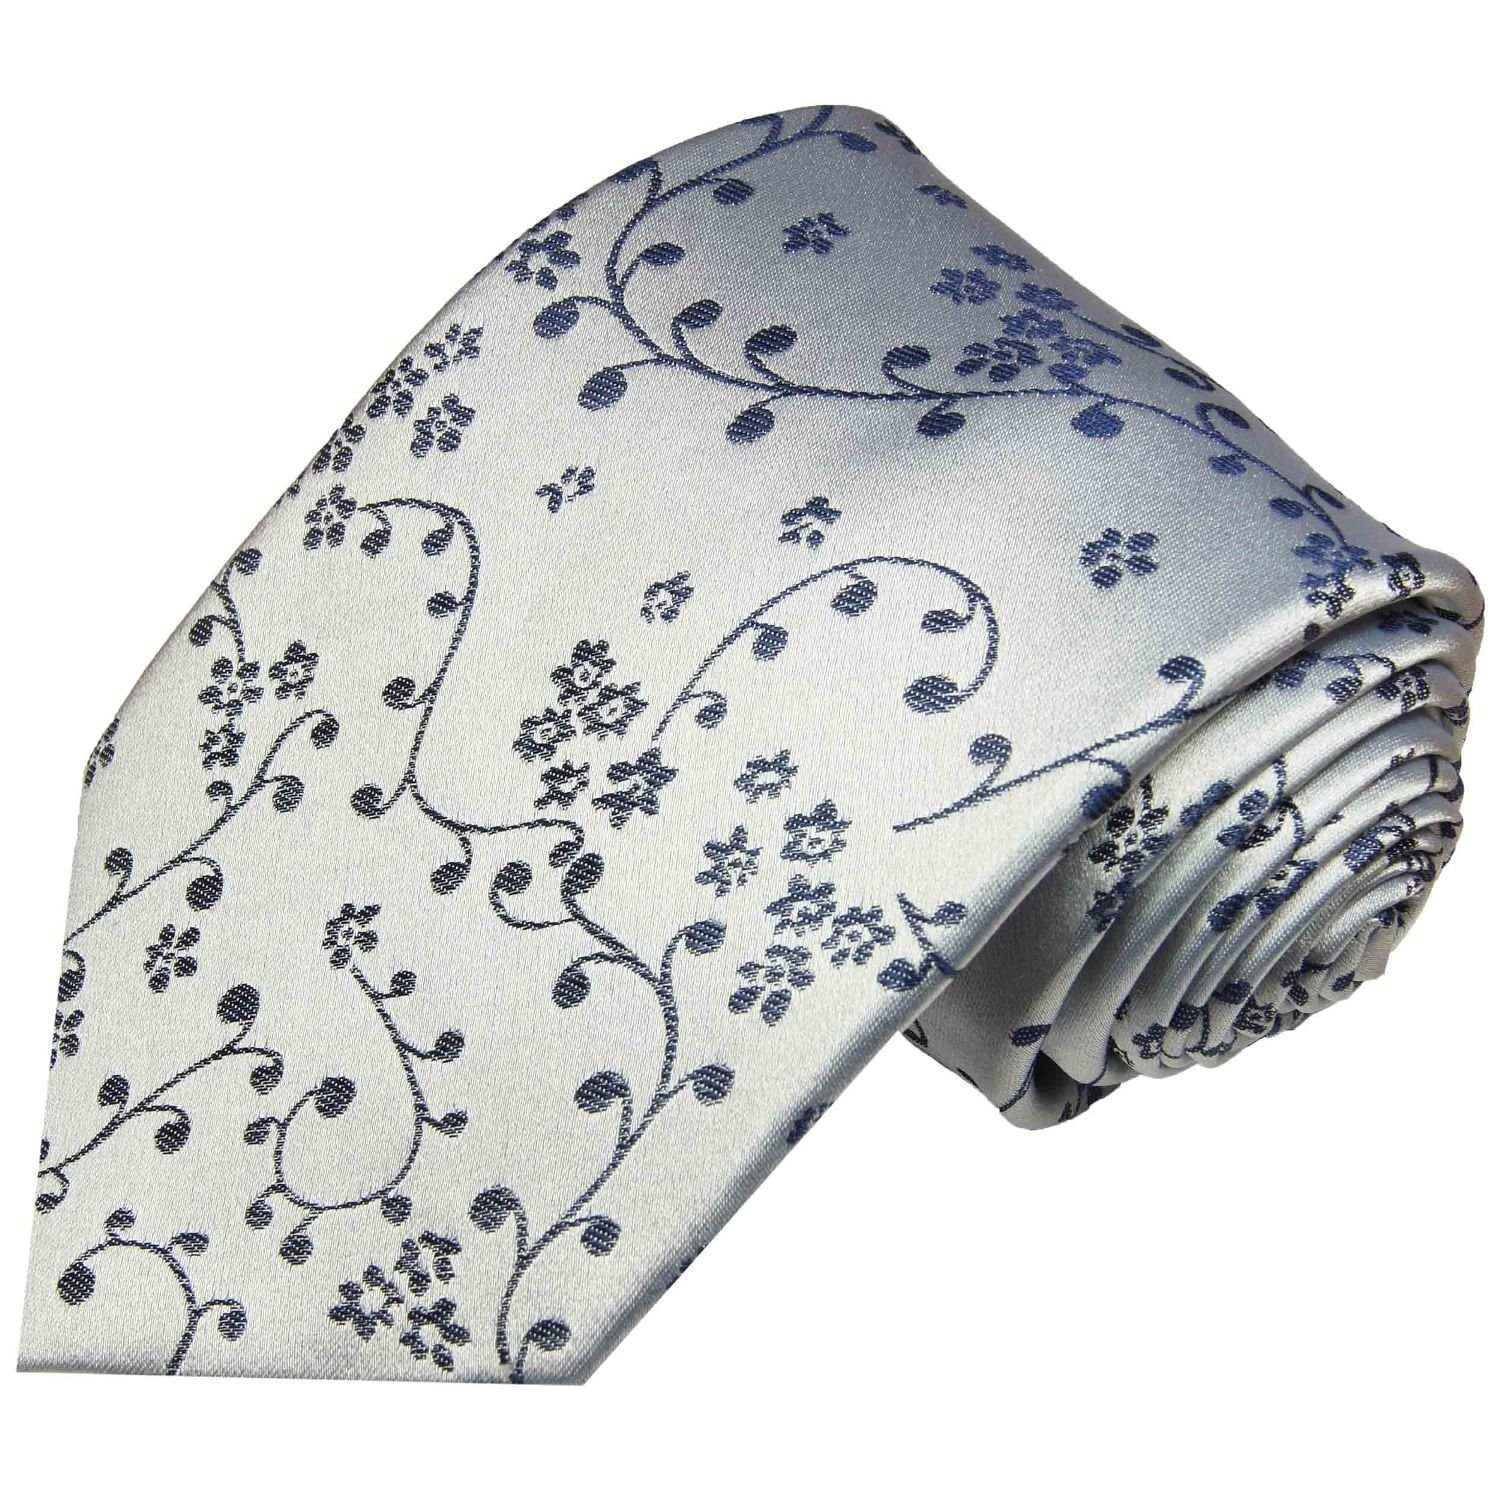 Paul Malone Krawatte Designer Seidenkrawatte Herren Schlips modern geblümt 100% Seide Breit (8cm), silber blau 974